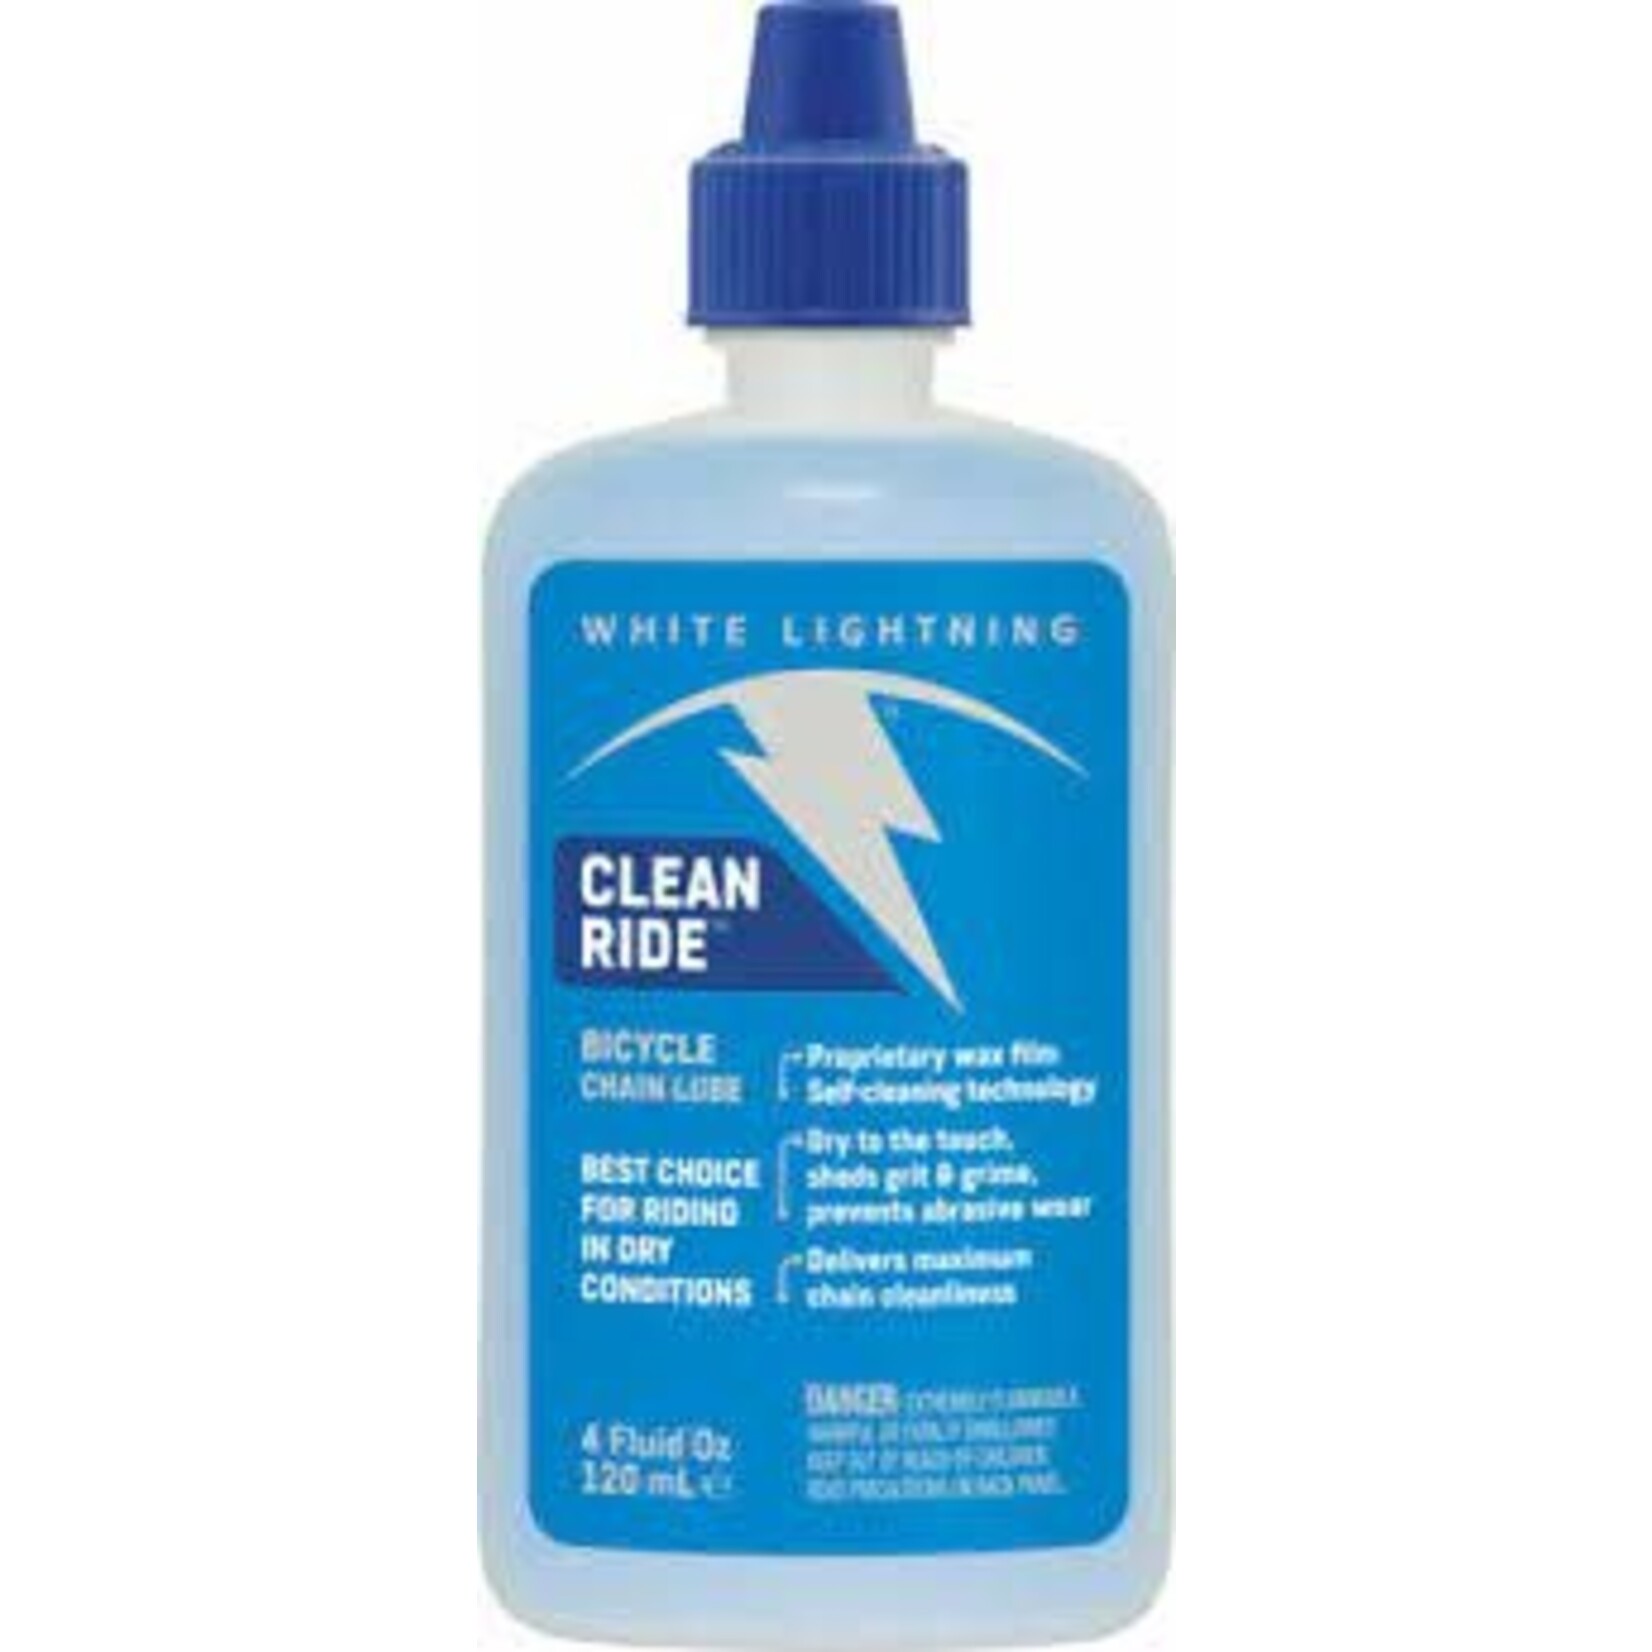 White Lightning Clean Ride 4oz wax lubricant